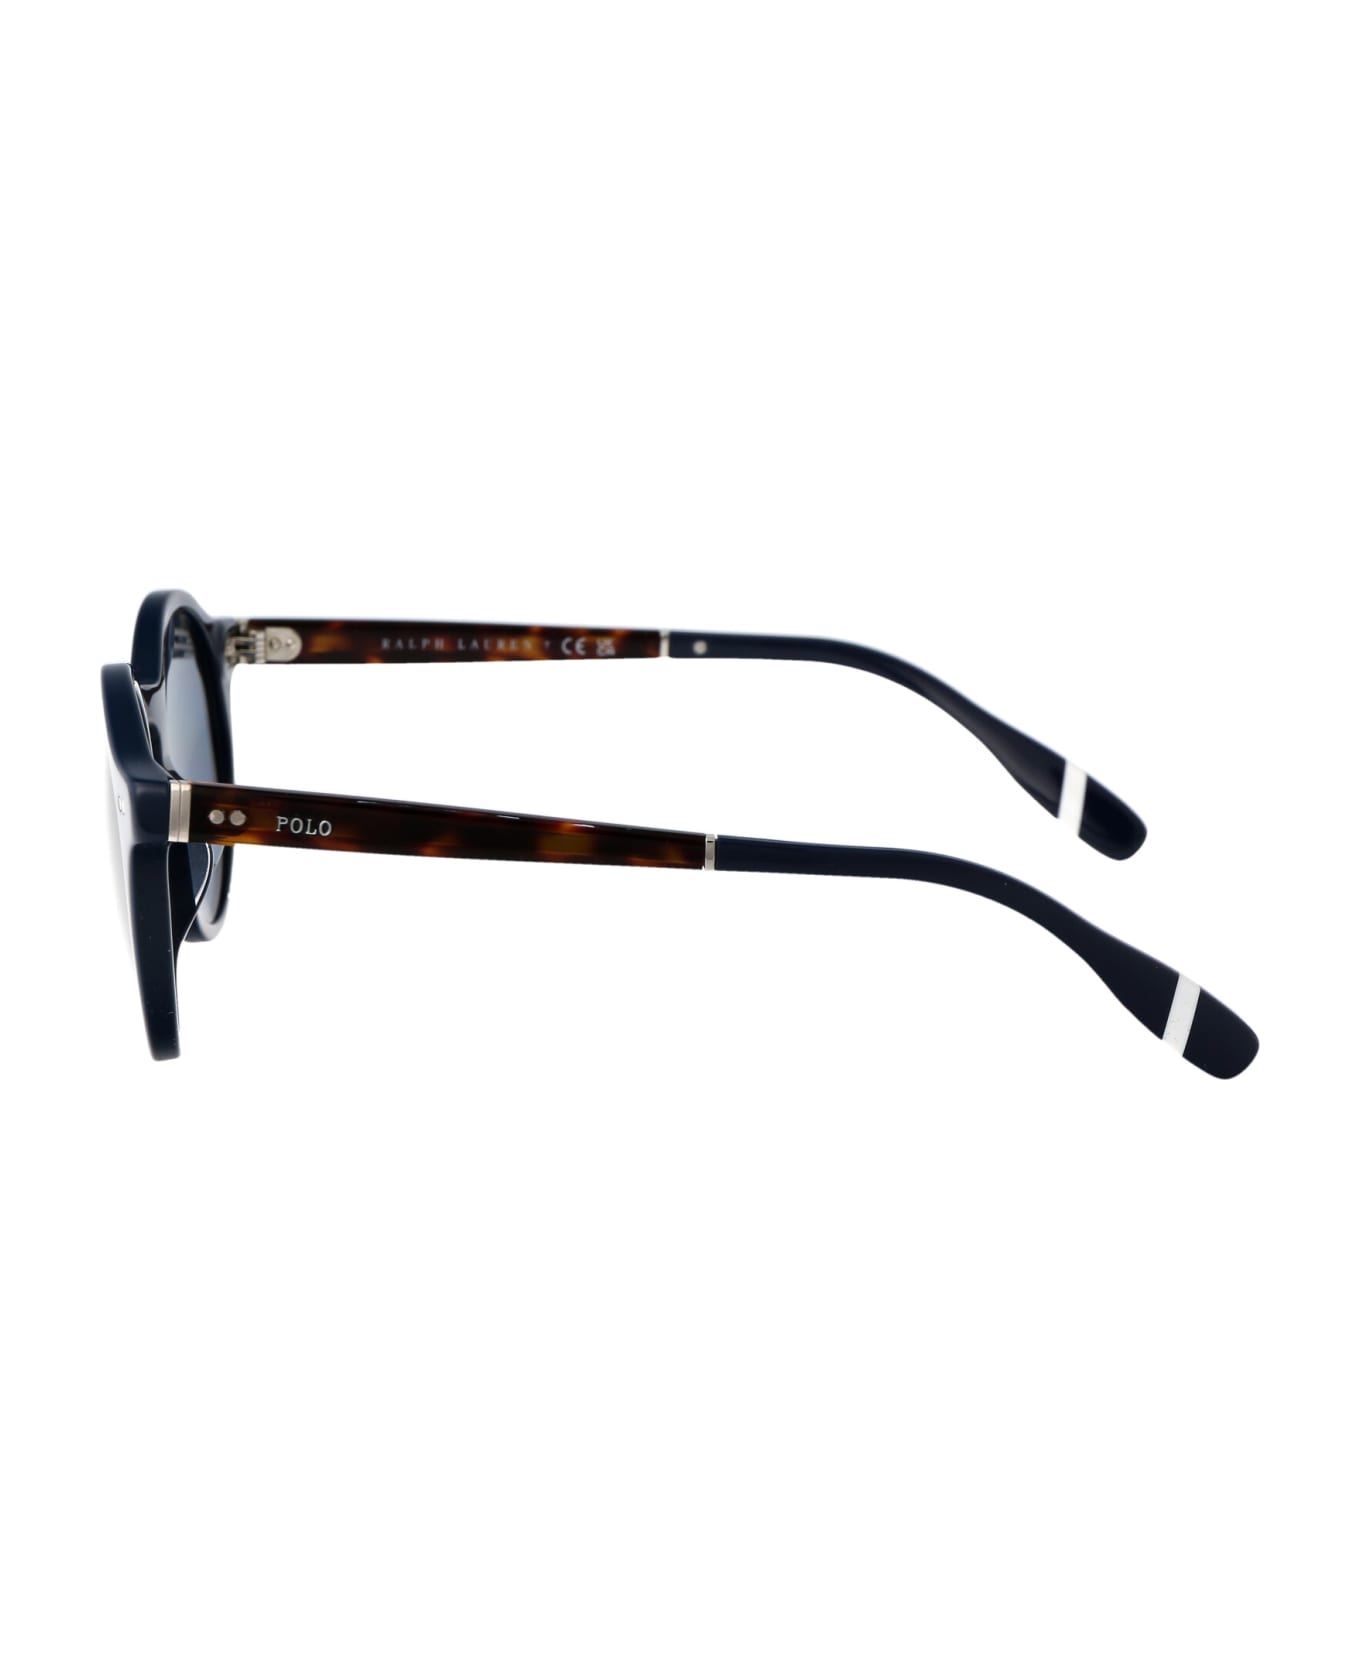 Polo Ralph Lauren 0ph4204u Sunglasses - 546580 Shiny Navy Blue サングラス